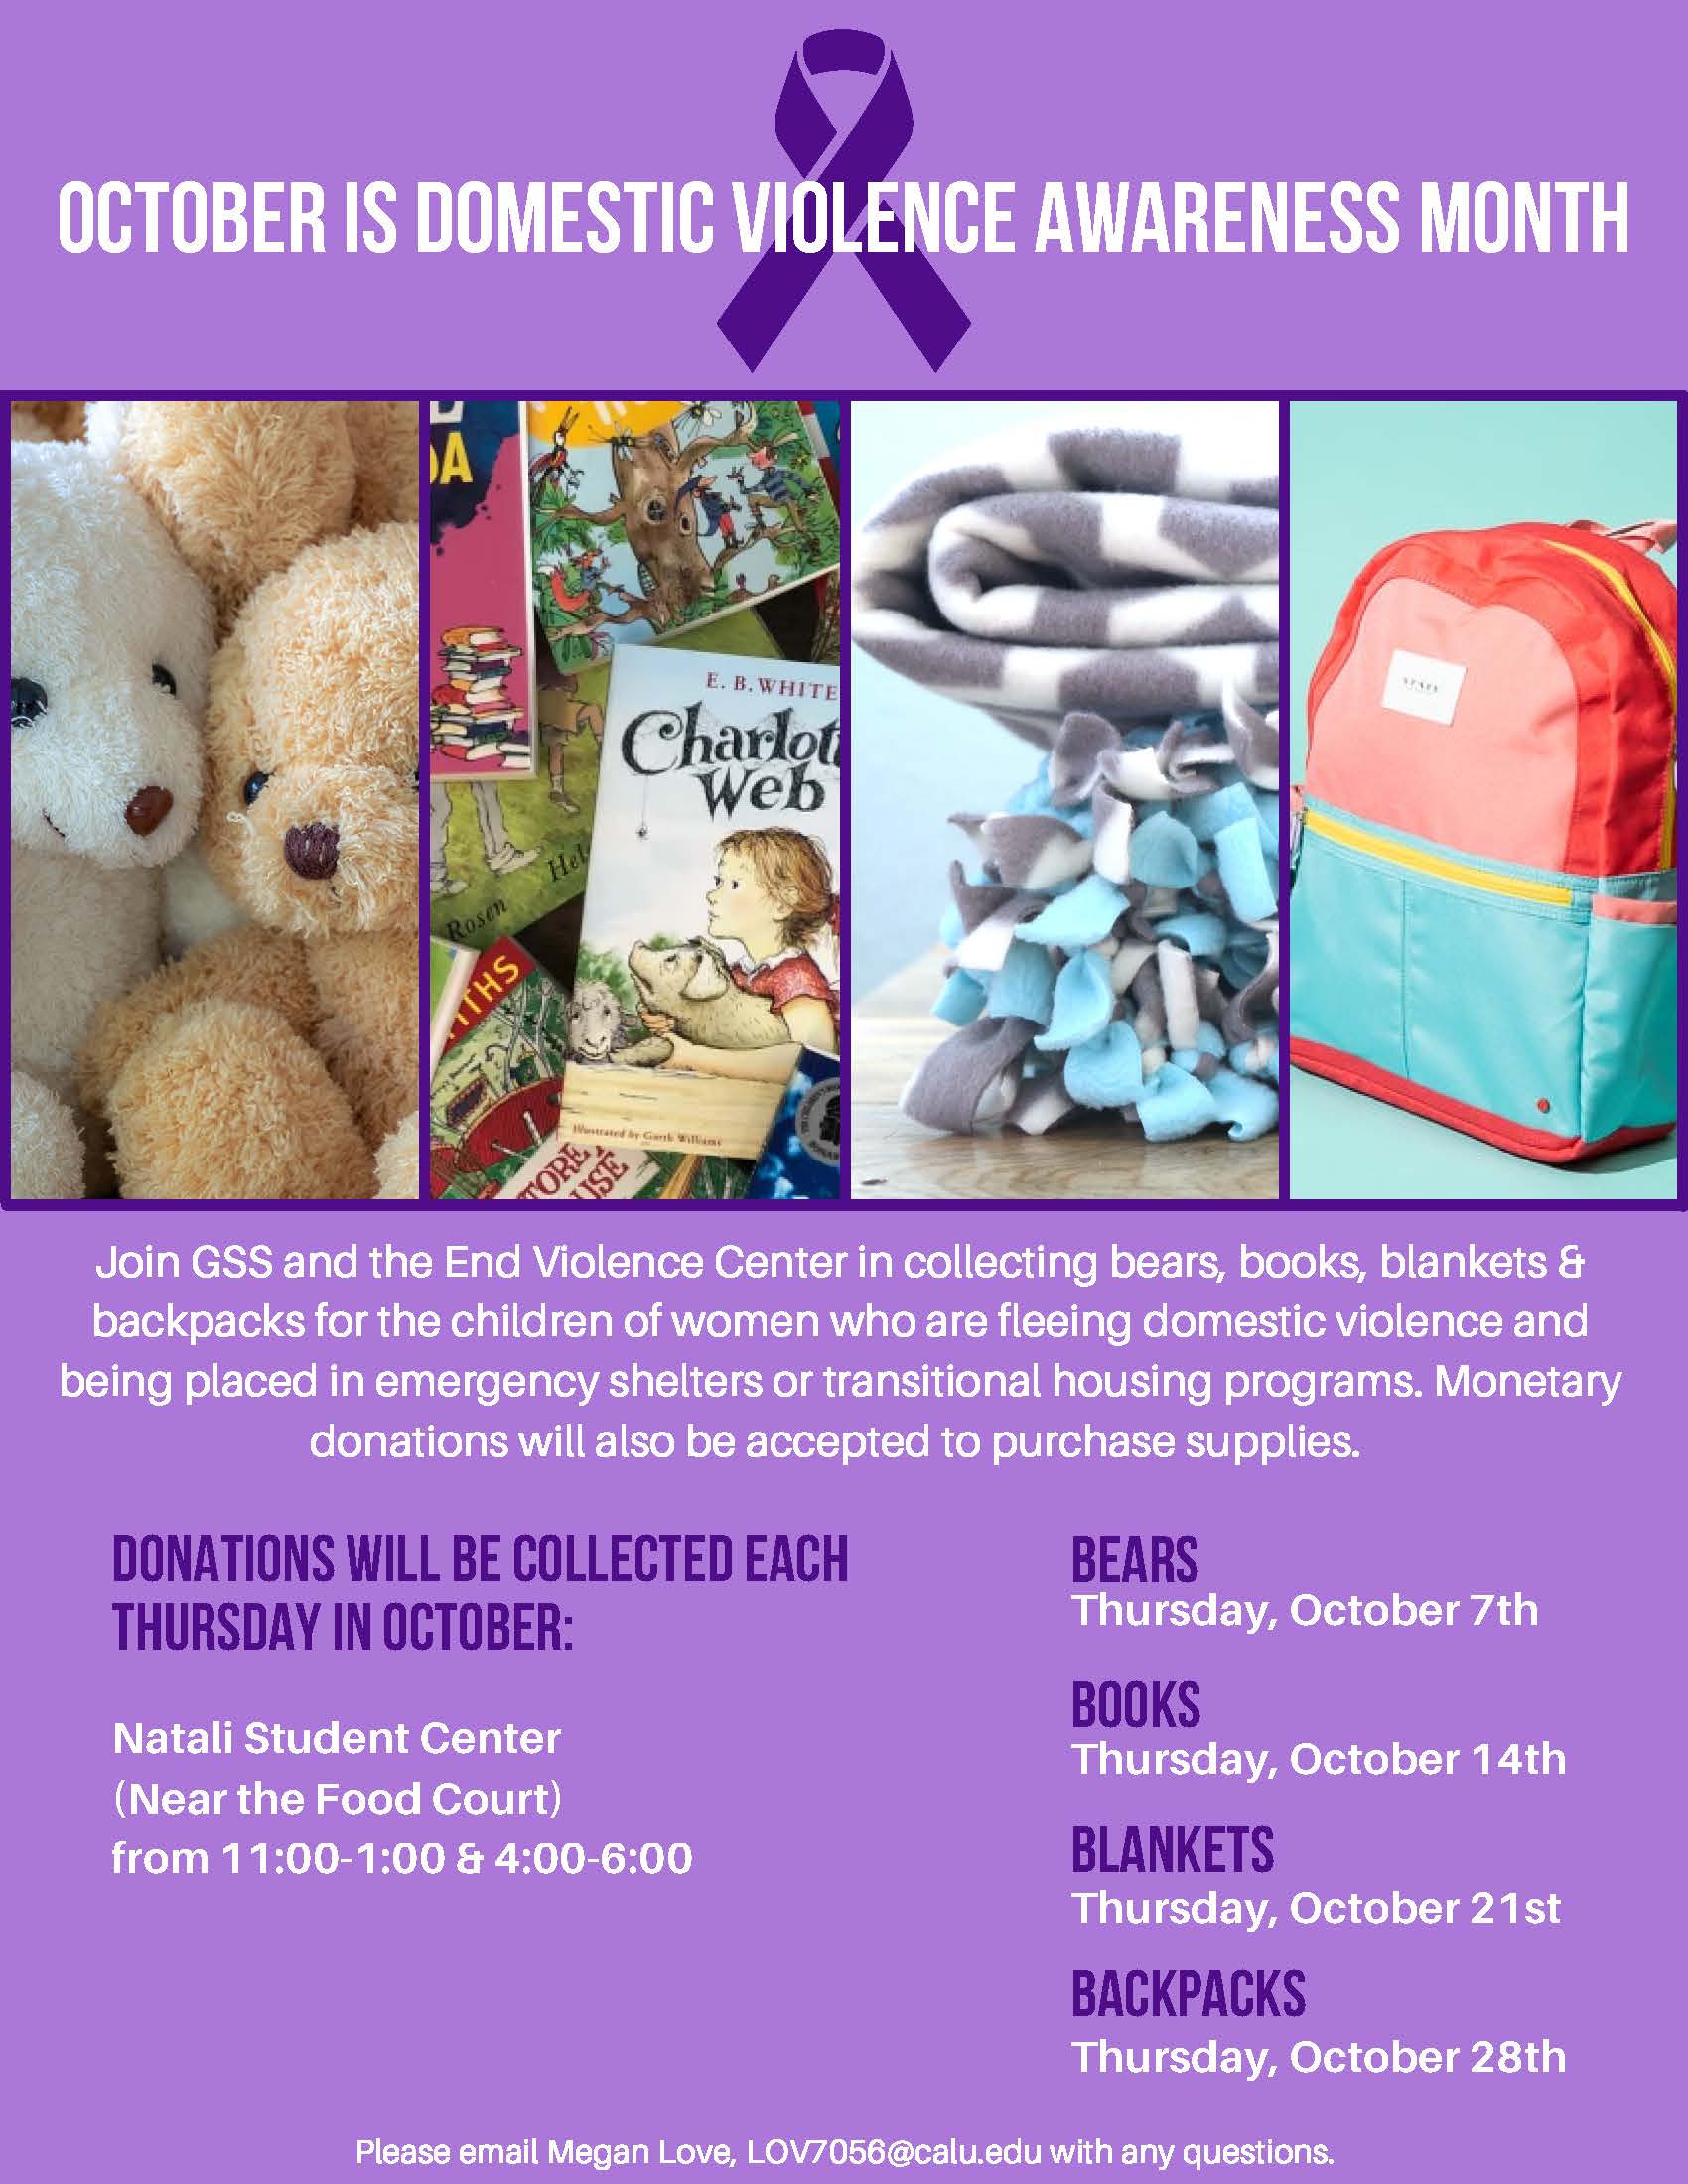 Donate Bears, Books, Blankets, and Backpacks!  BBBB